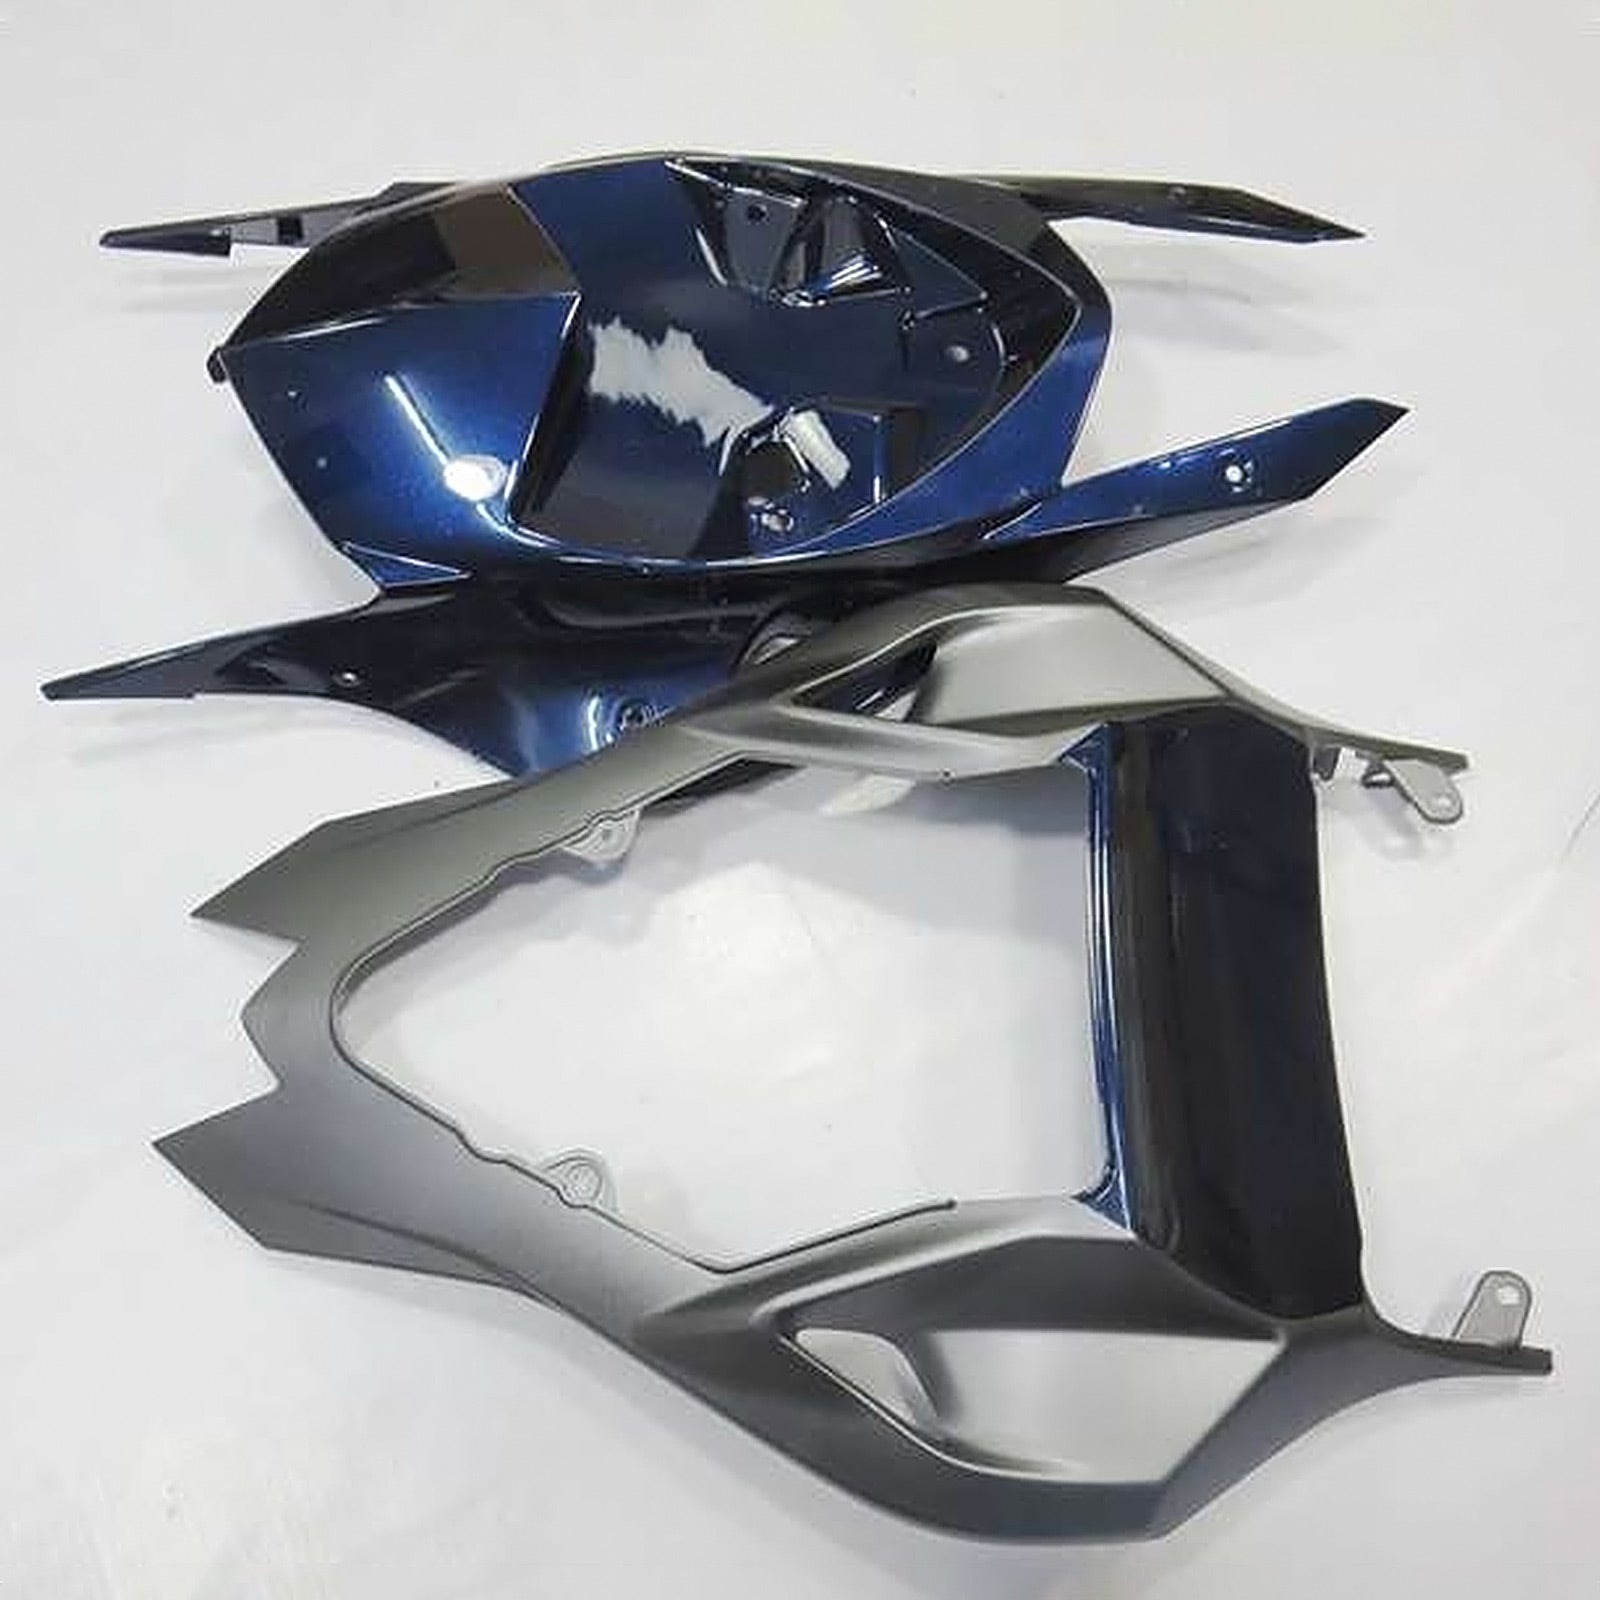 Kit carenatura iniezione Amotopart Carrozzeria in plastica ABS per BMW S1000RR 2009-2014 generico